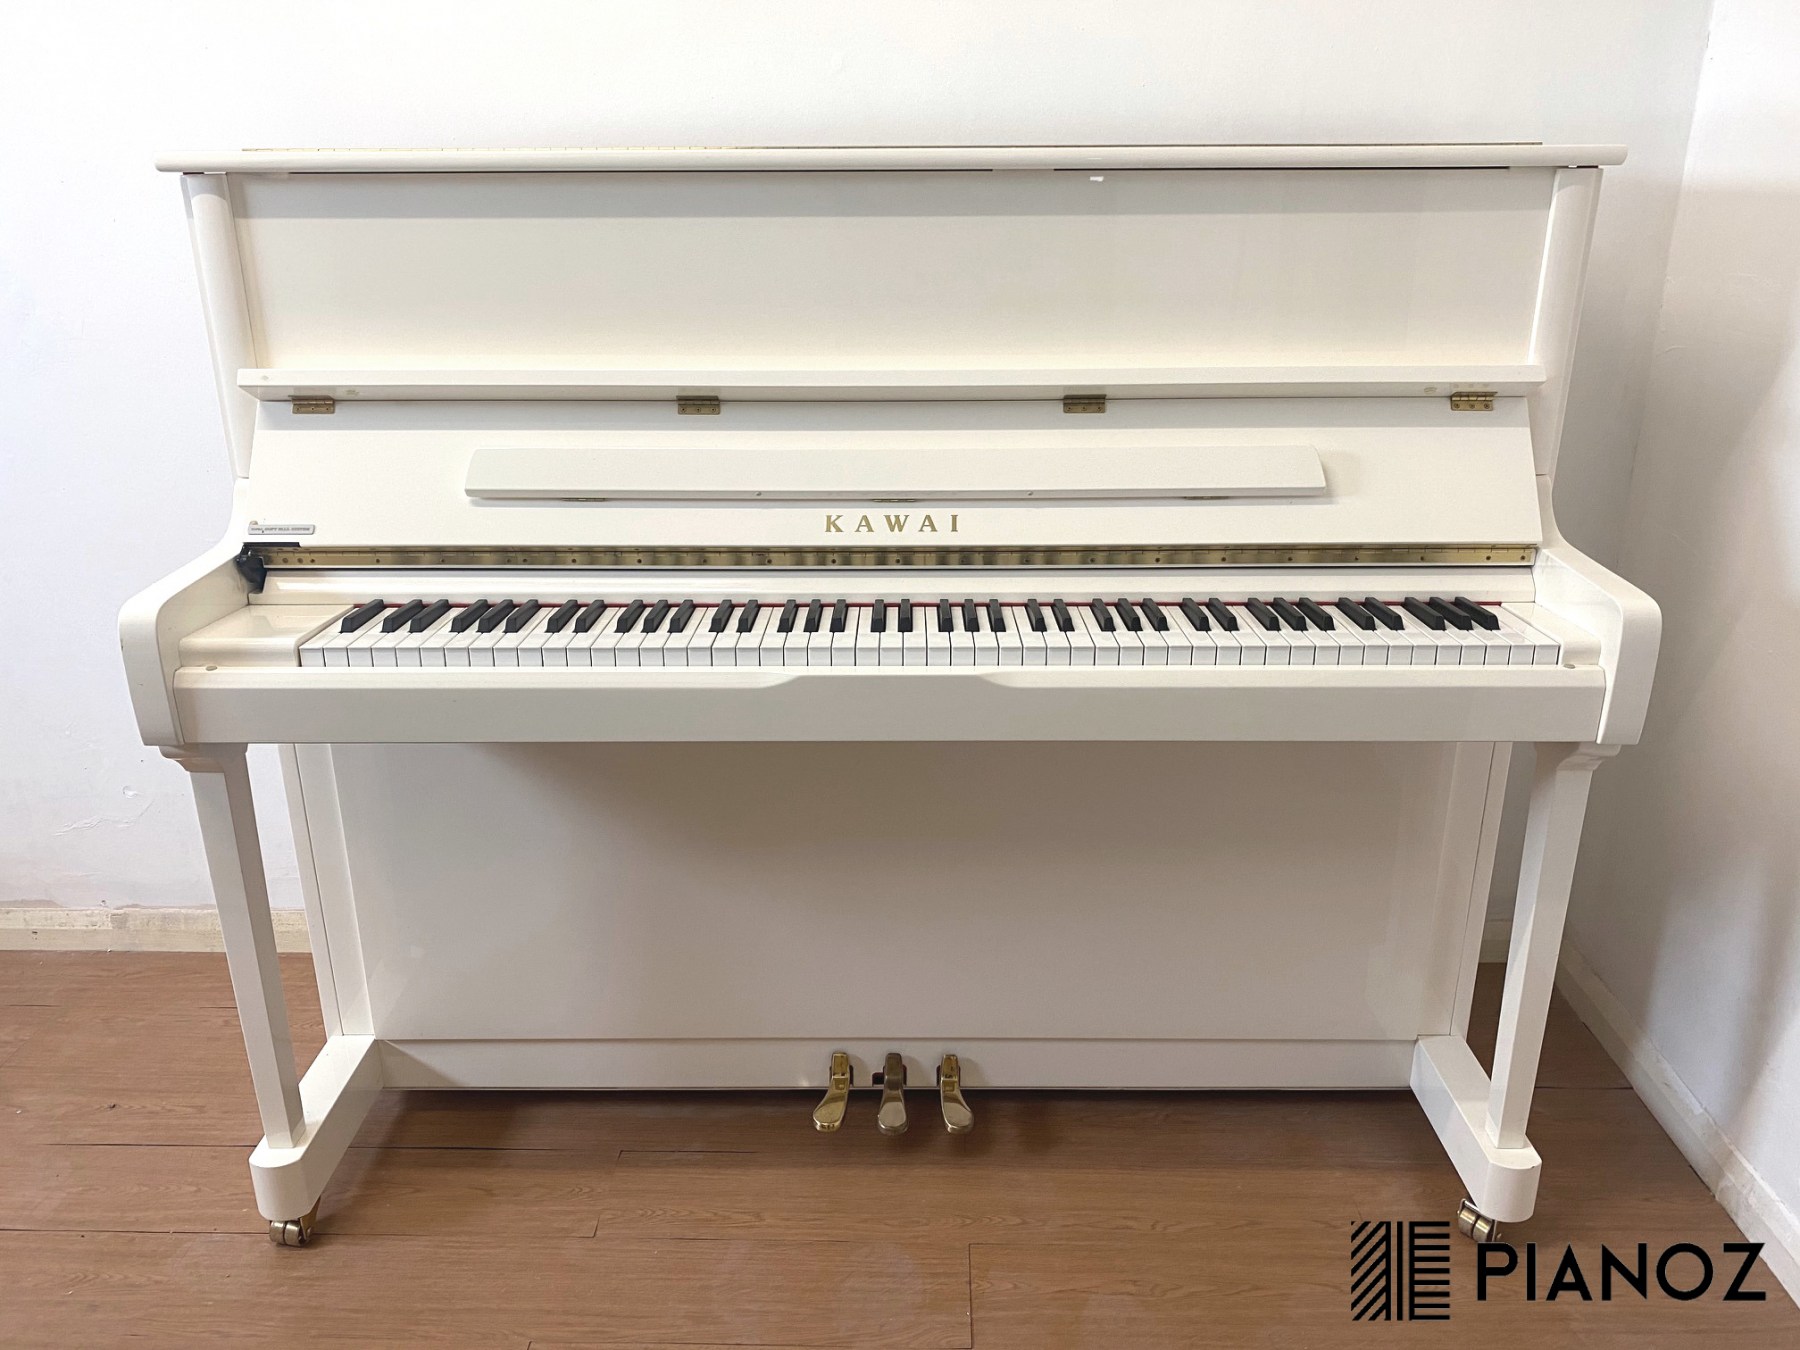 Kawai K3 White Upright Piano piano for sale in UK